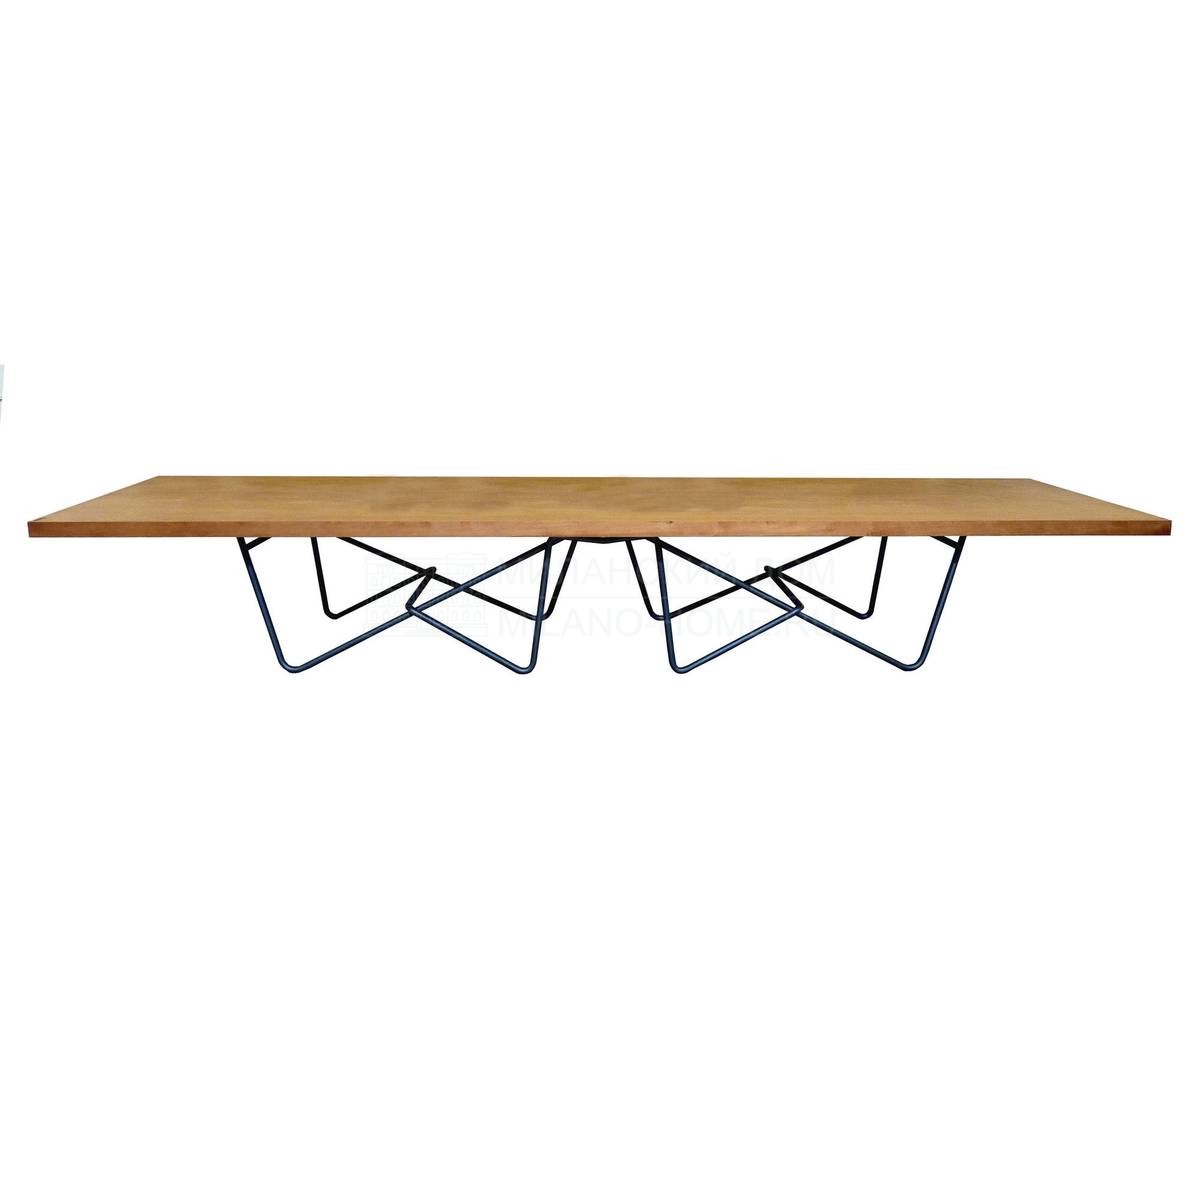 Обеденный стол Antico/table из Италии фабрики RIVA1920